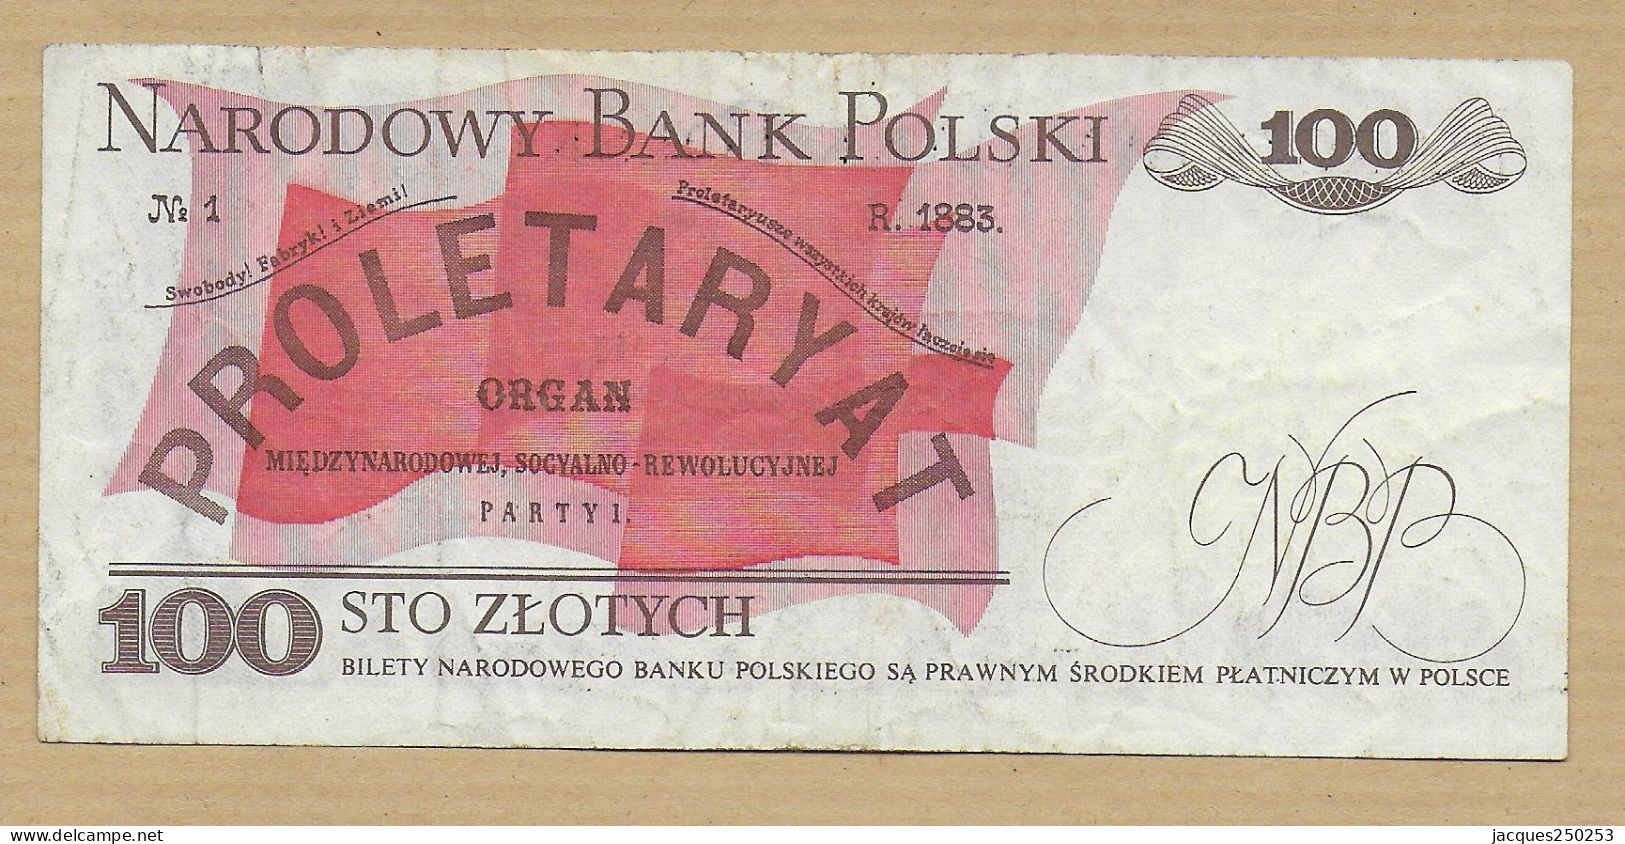 100 STO ZLOTYCH 1 JUIN 1986 - Poland